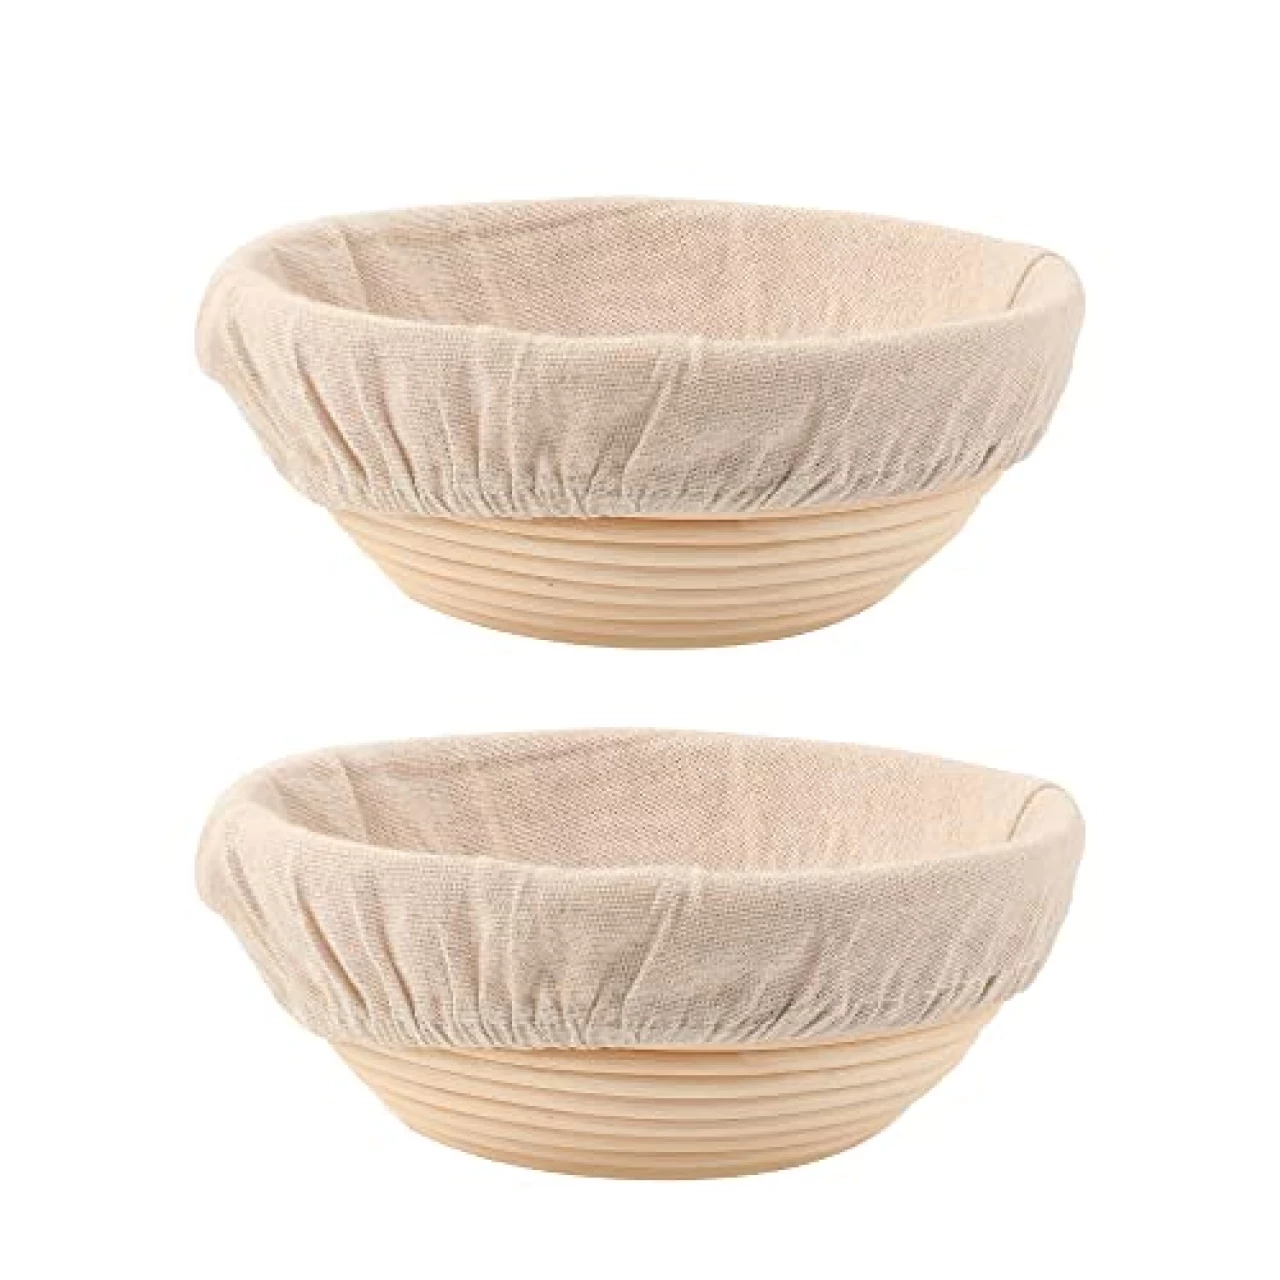 DOYOLLA Bread Proofing Baskets Set of 2